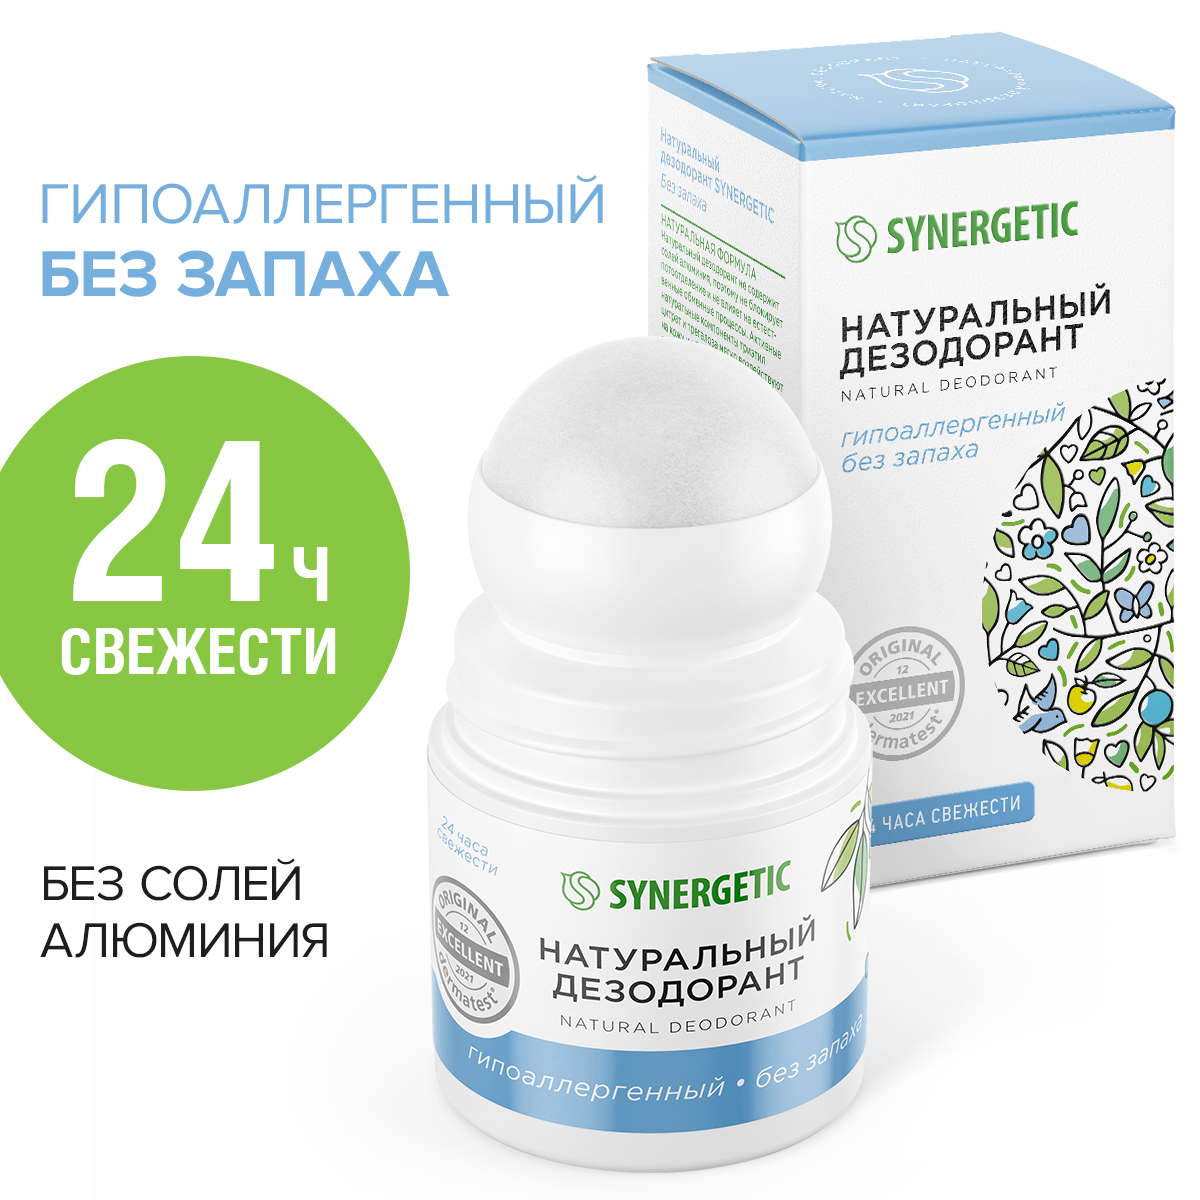 Натуральный дезодорант SYNERGETIC без запаха натуральный дезодорант synergetic без запаха